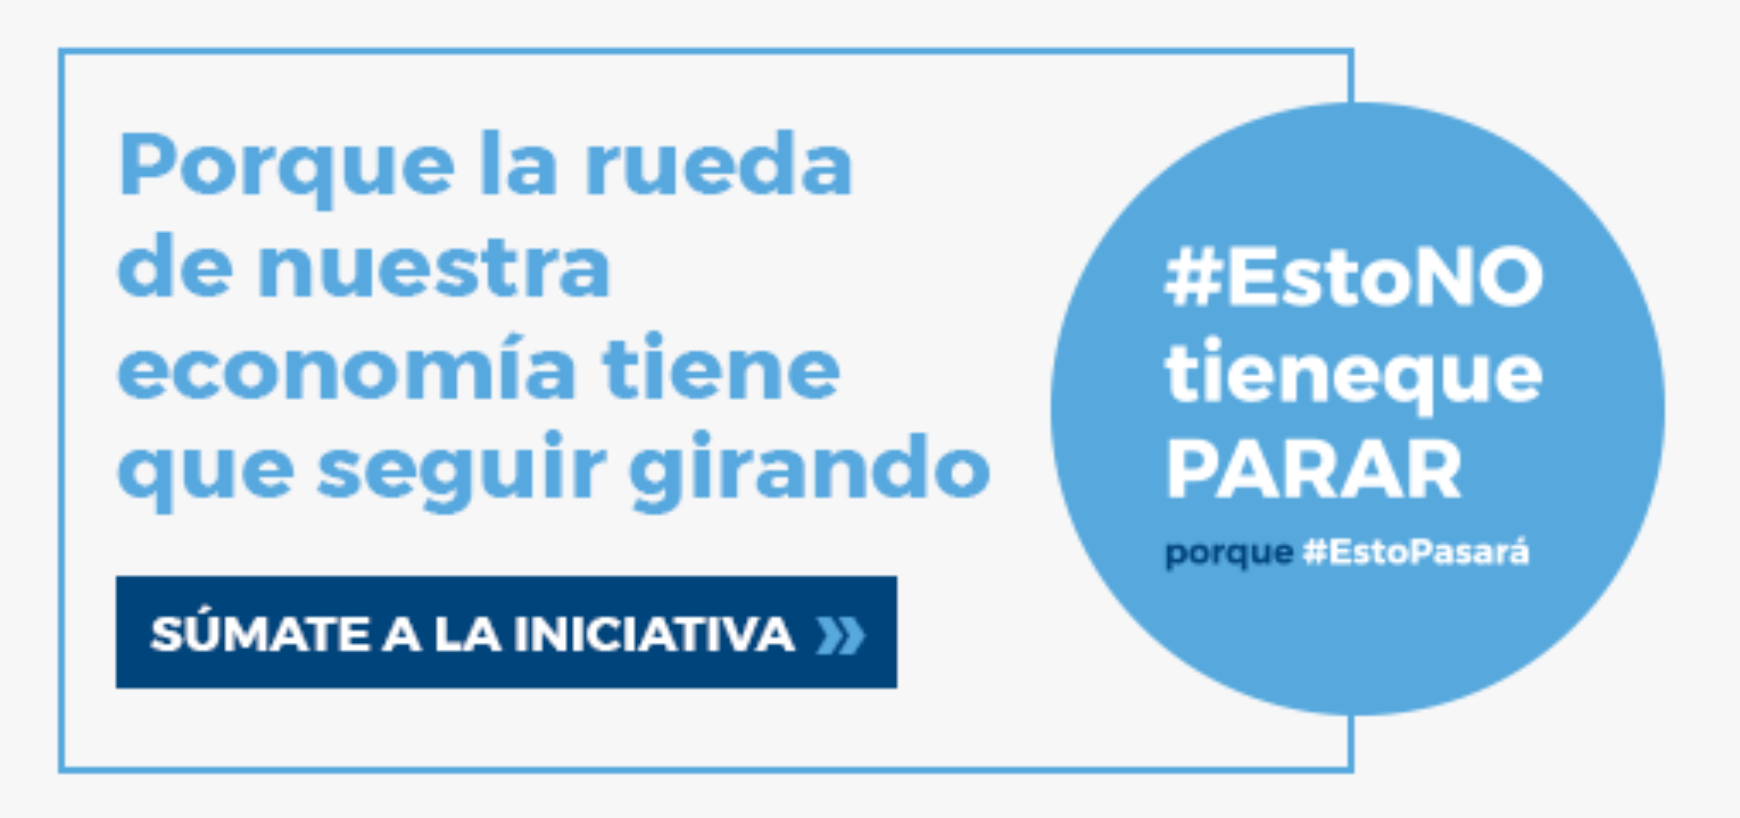 AEPA se suma al movimiento #EstoNOtienequePARAR